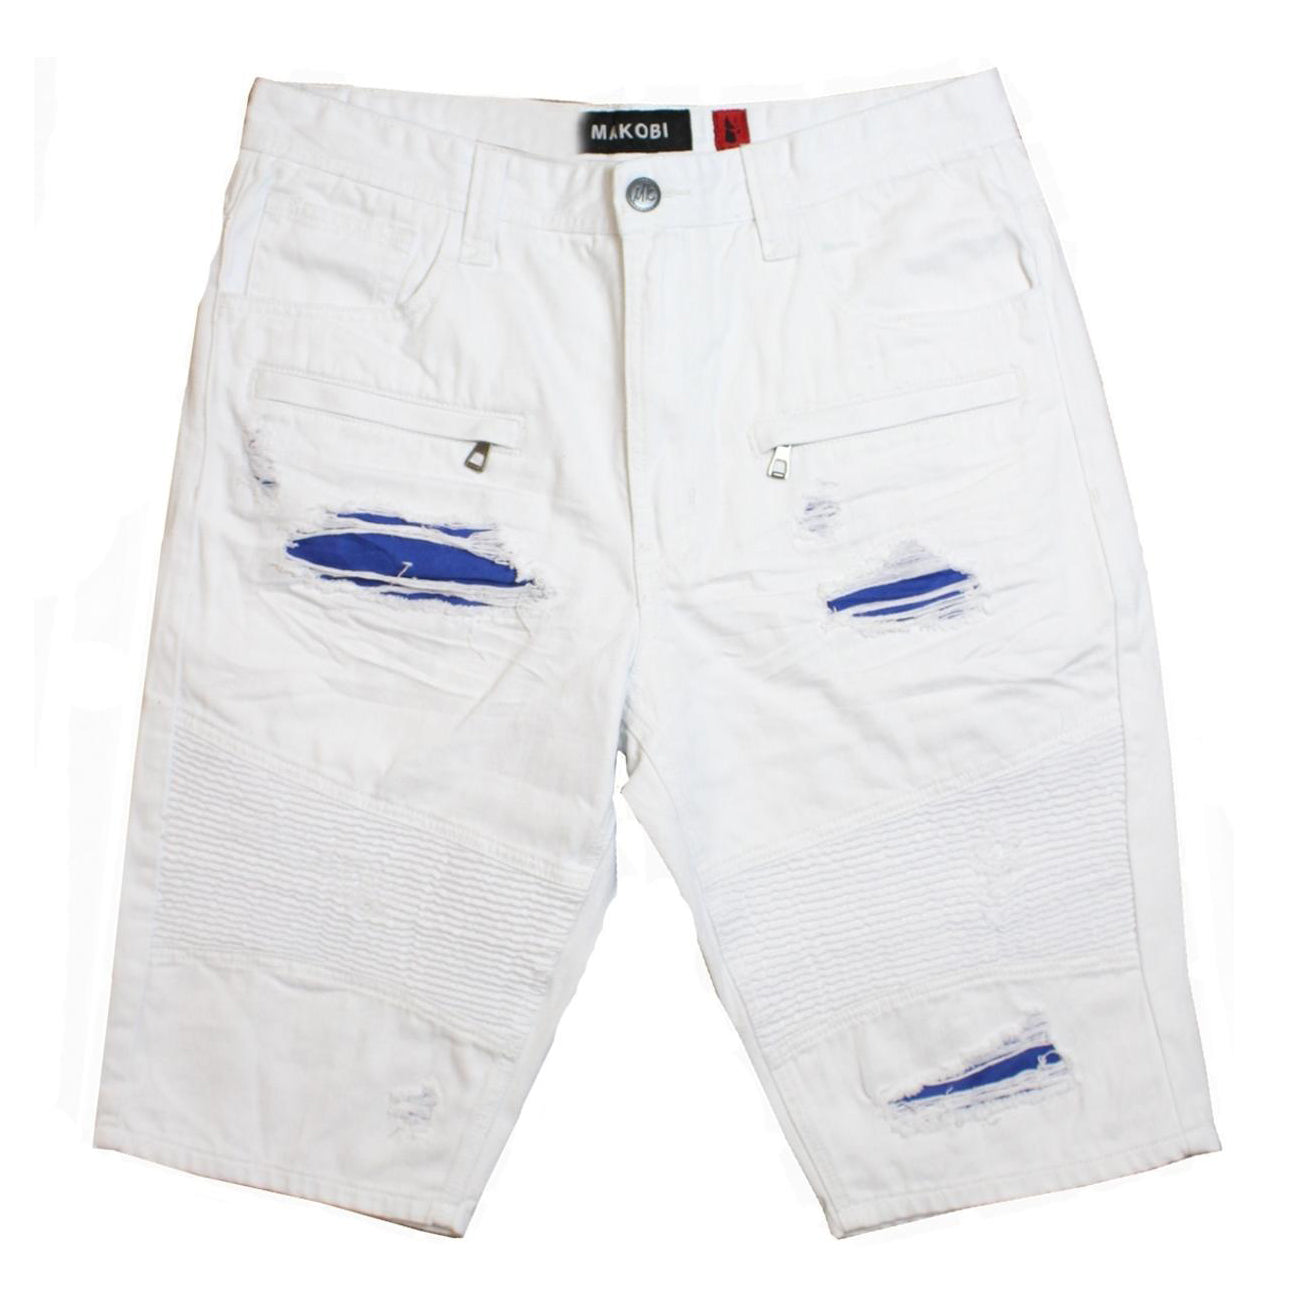 M786 Makobi Biker Shredded Shorts - White